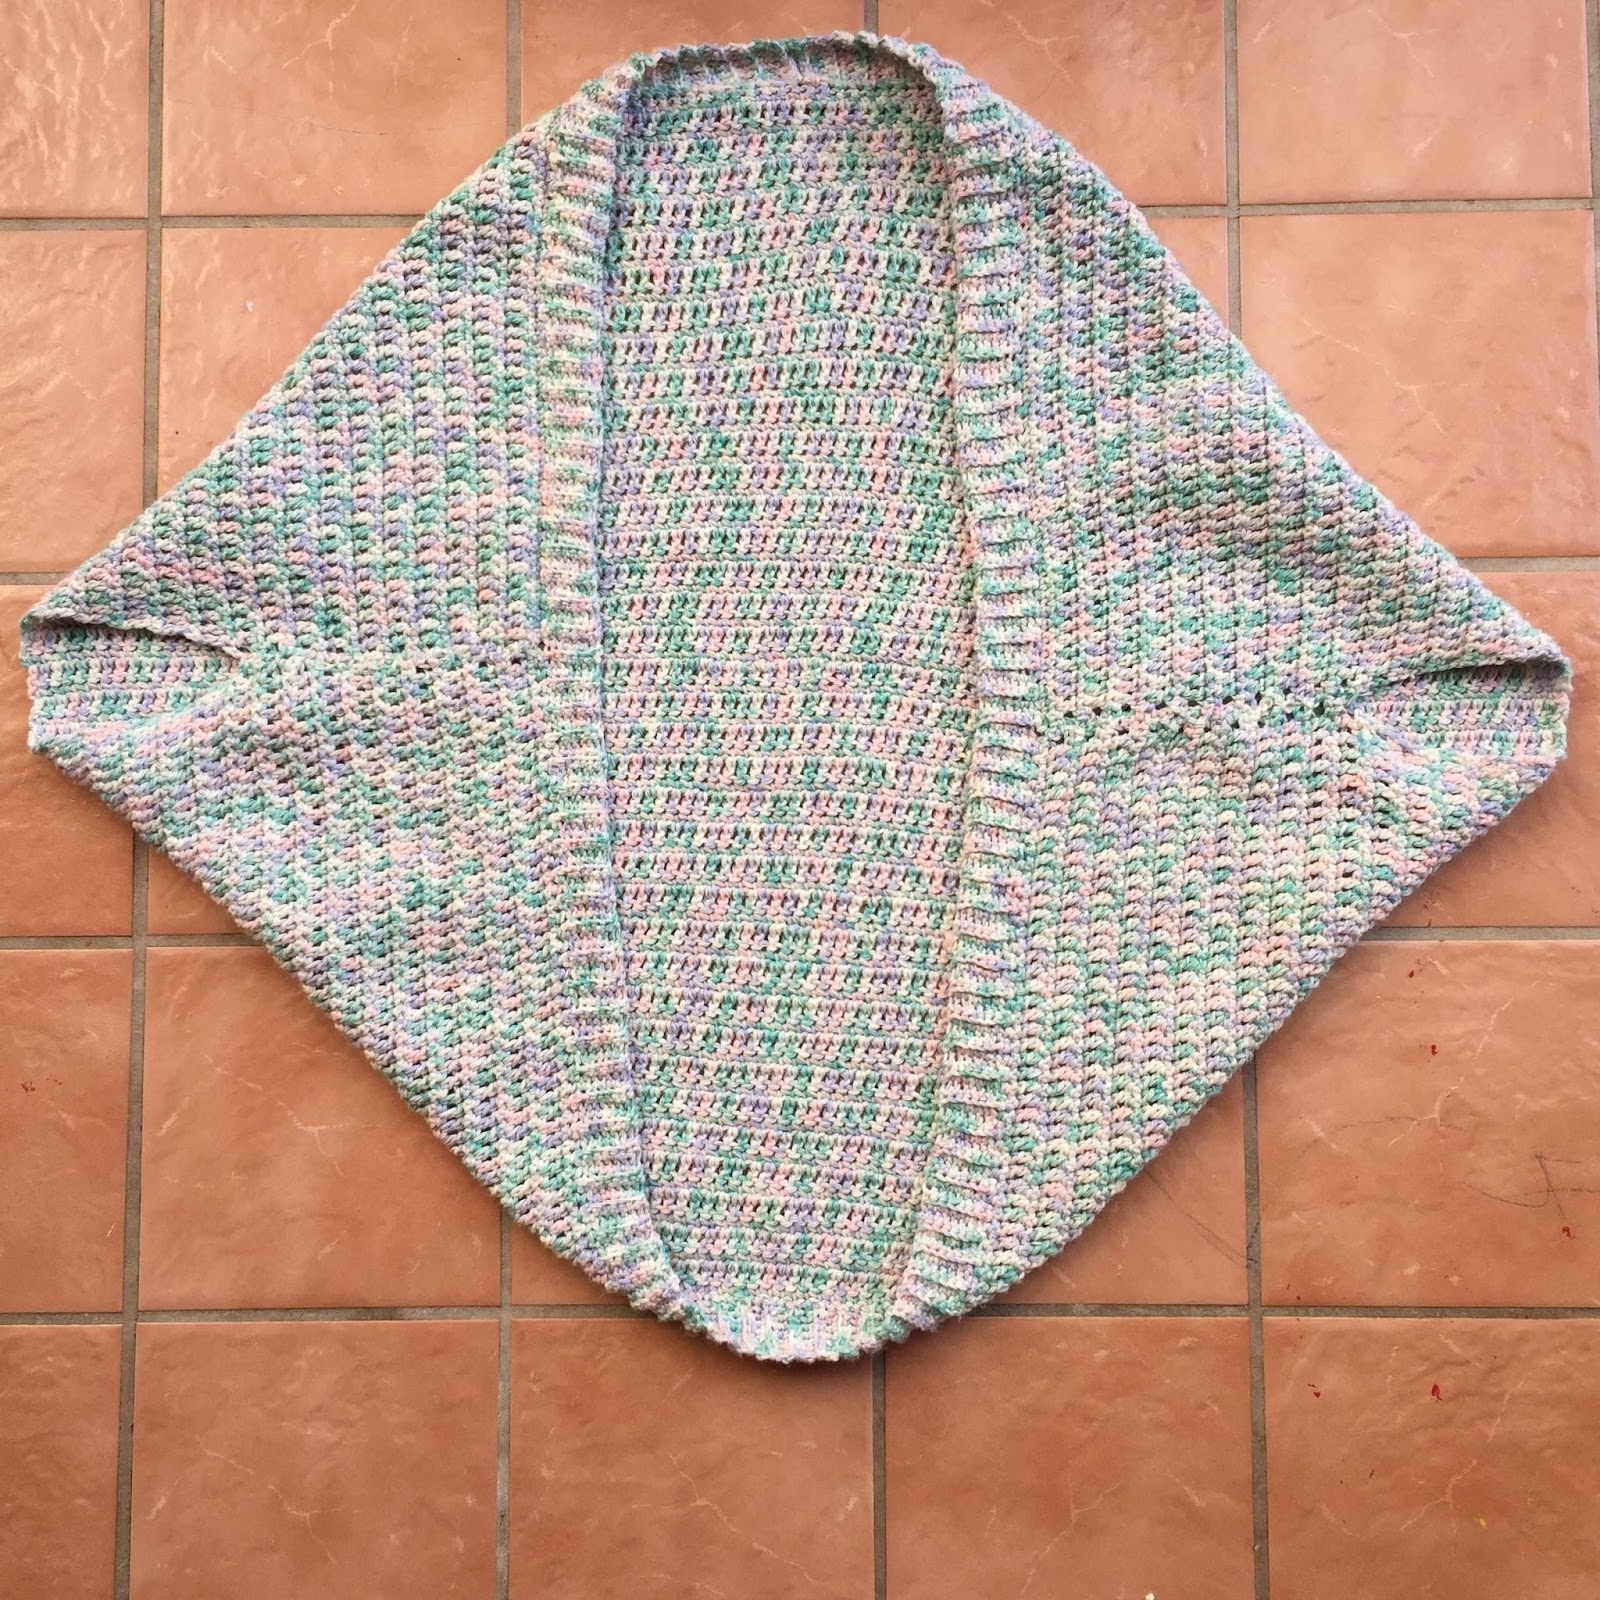 Mama's Crochet Shrug - Cute & Cozy Crochet